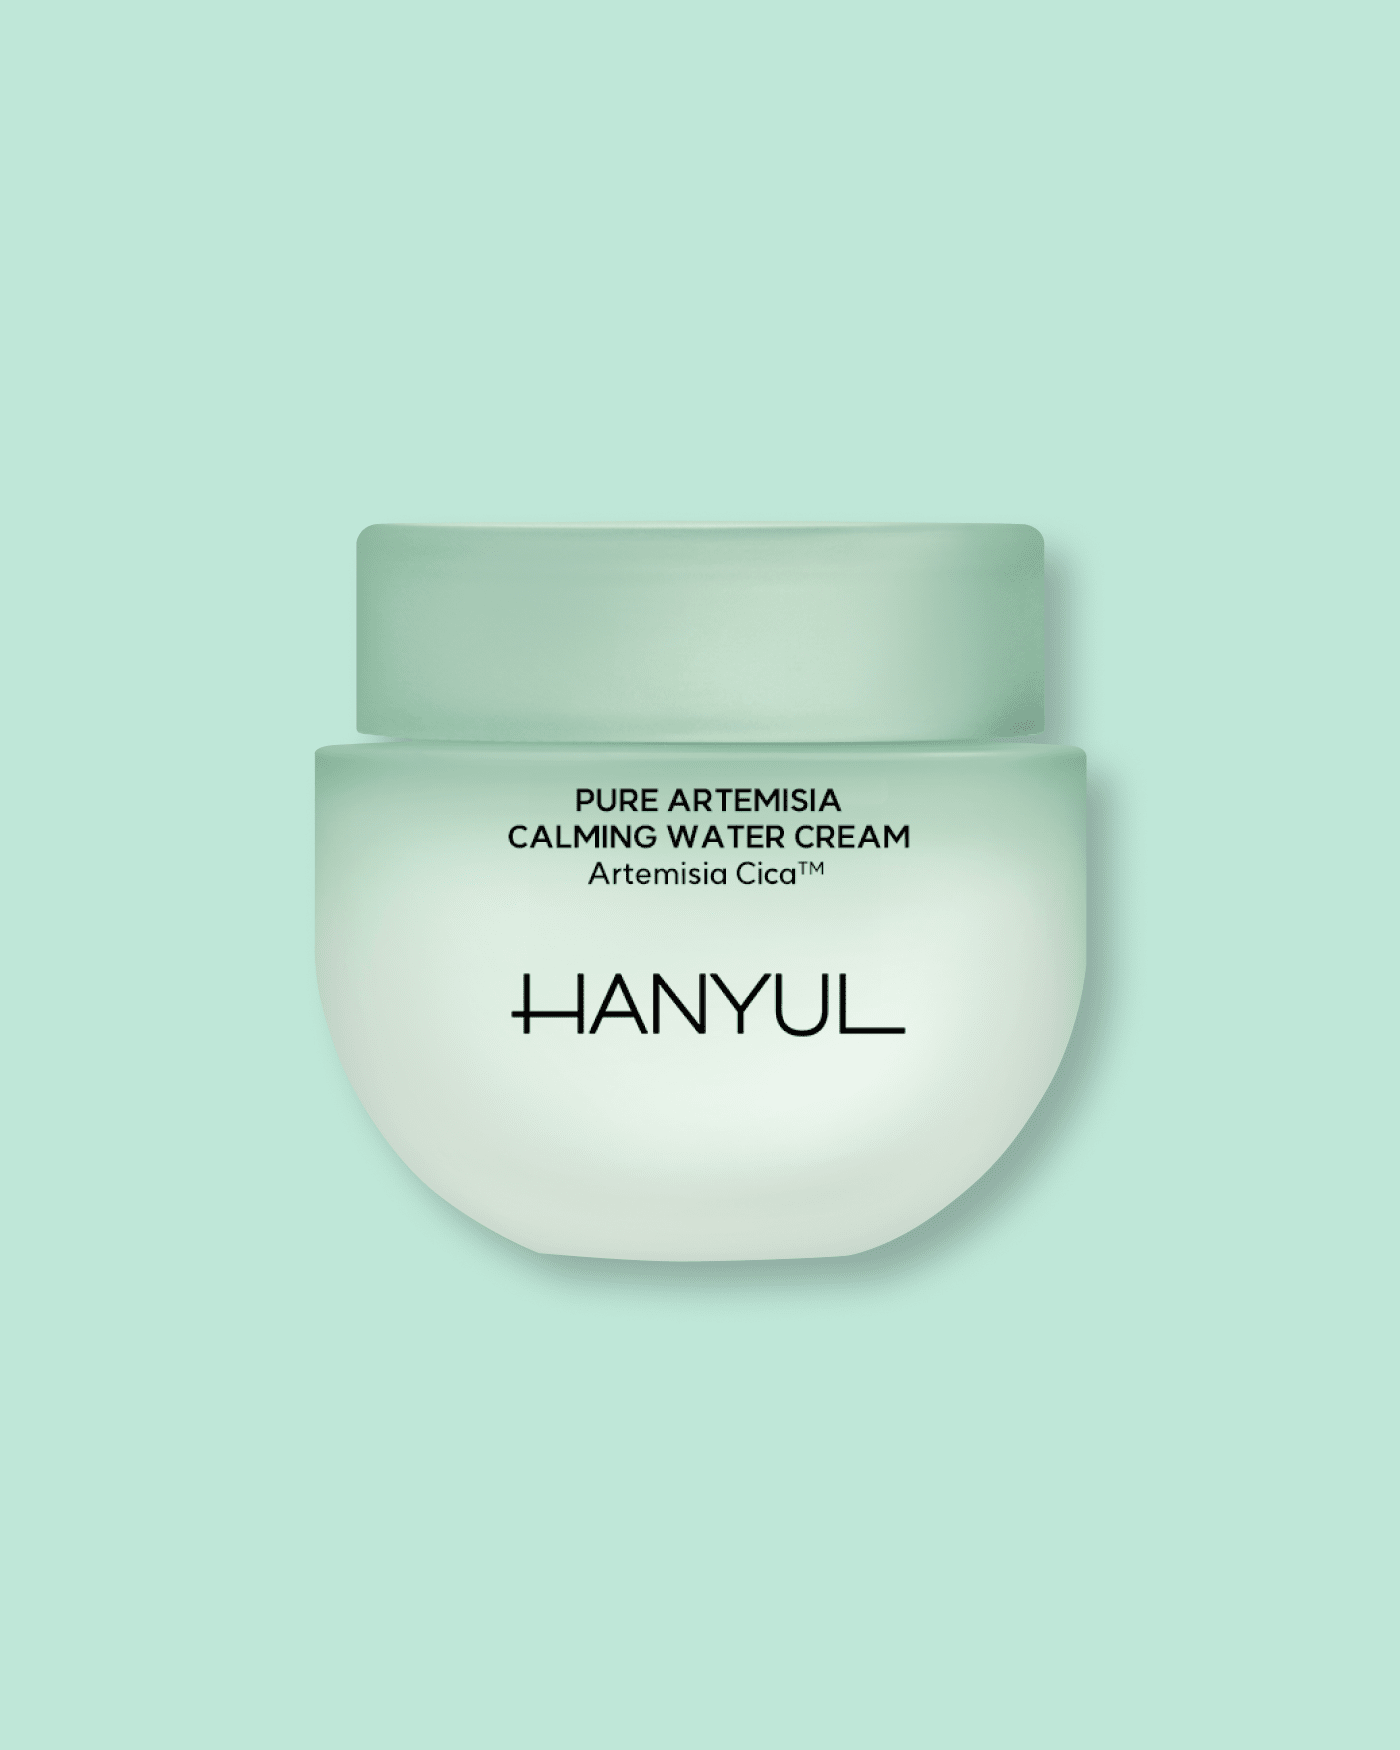 Pure Artemisia Hydrating Calming Water Cream Facial Moisturizer Hanyul 